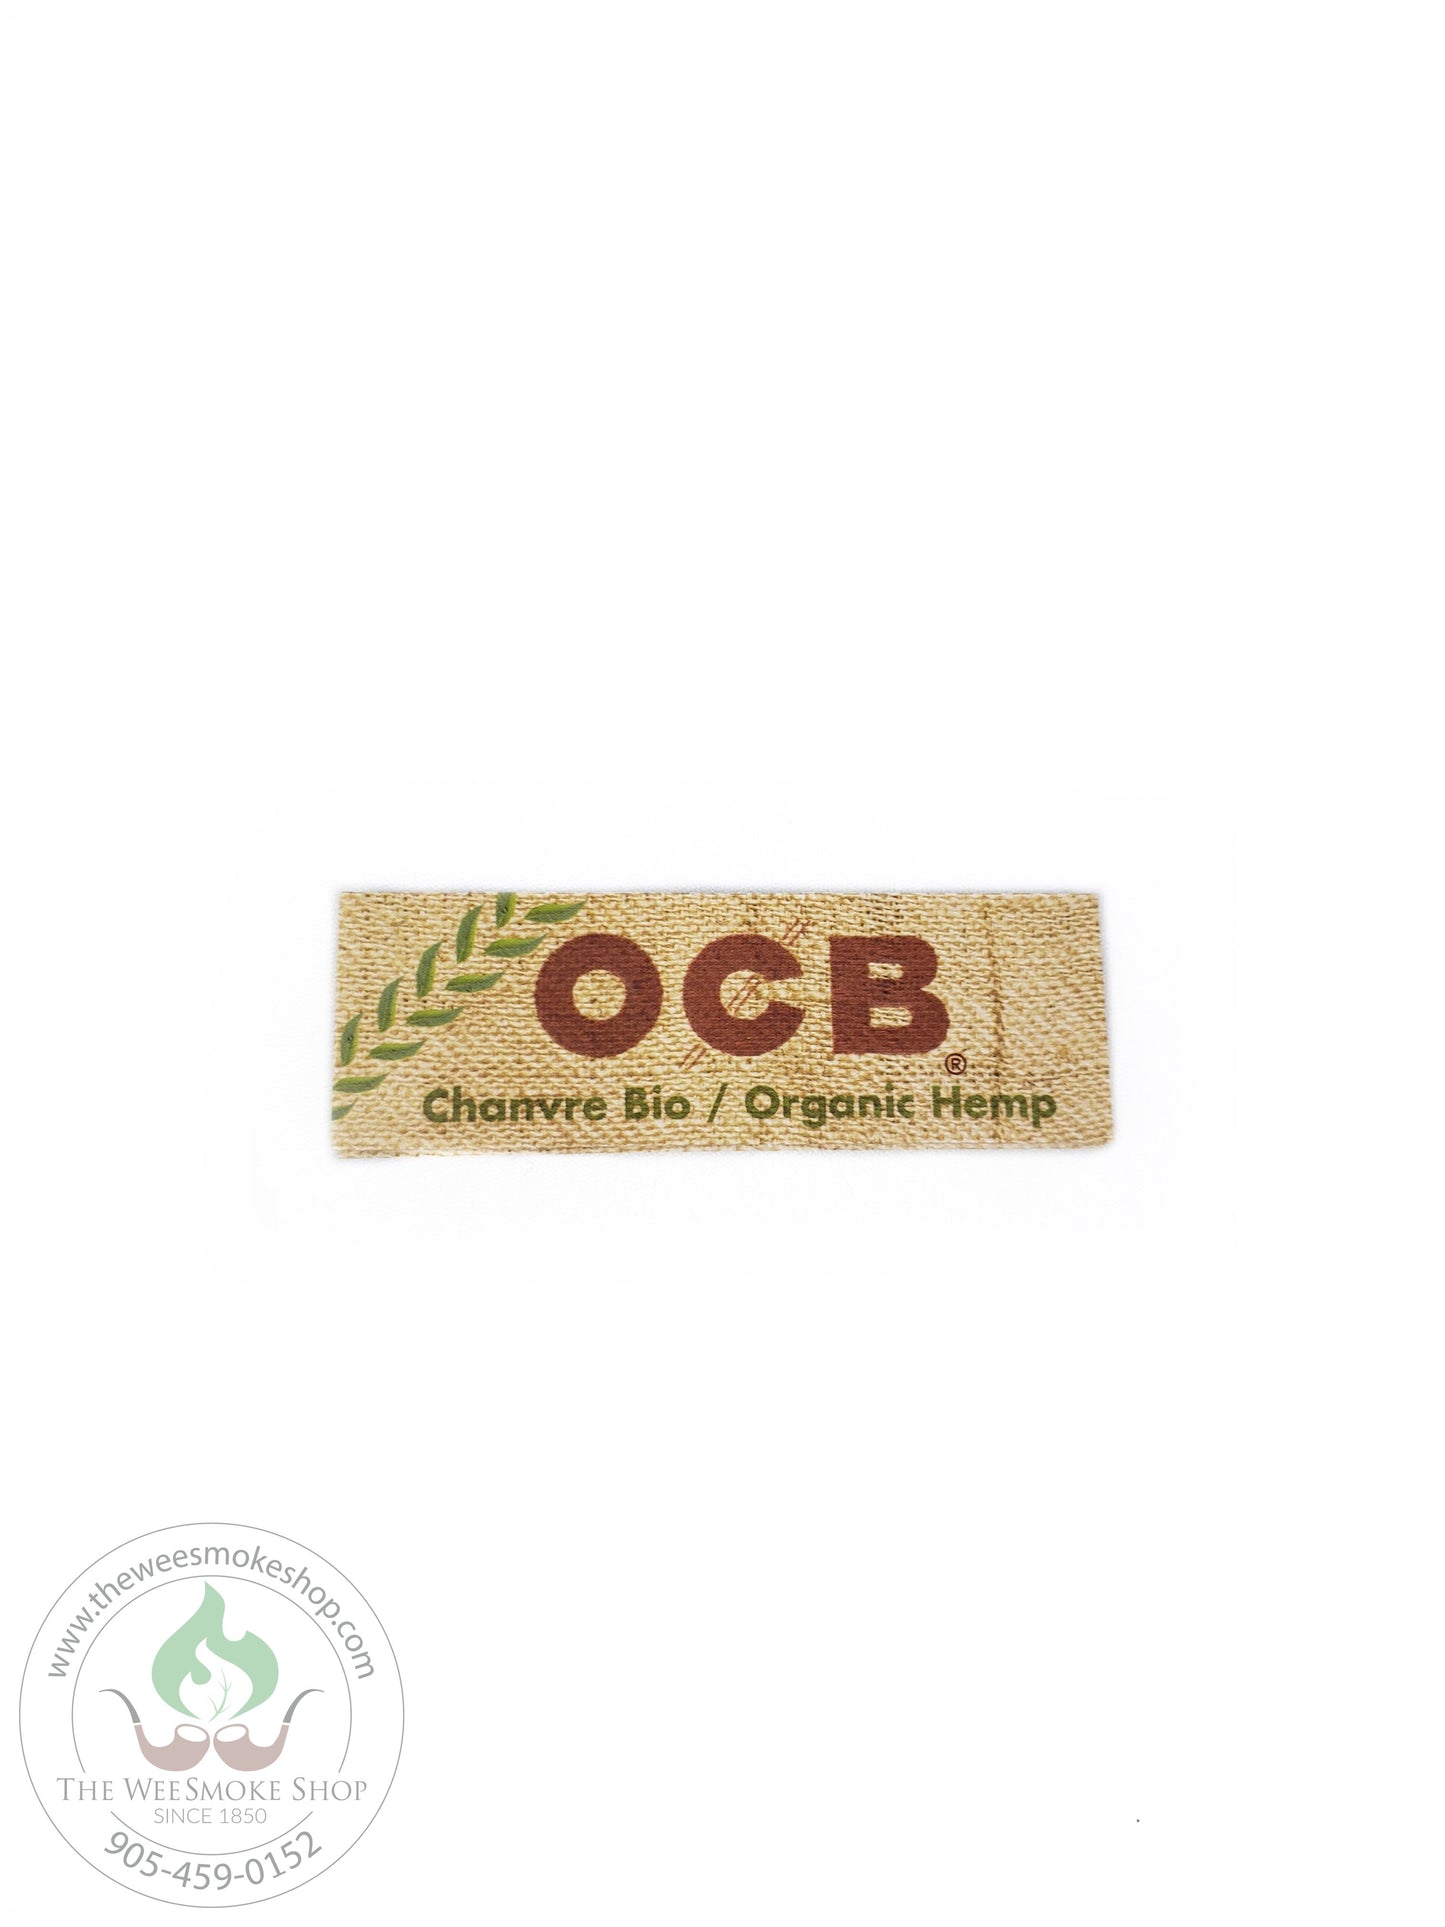 OCB Organic Hemp Rolling Papers brown pack. 1 1/4 size.The Wee Smoke Shop